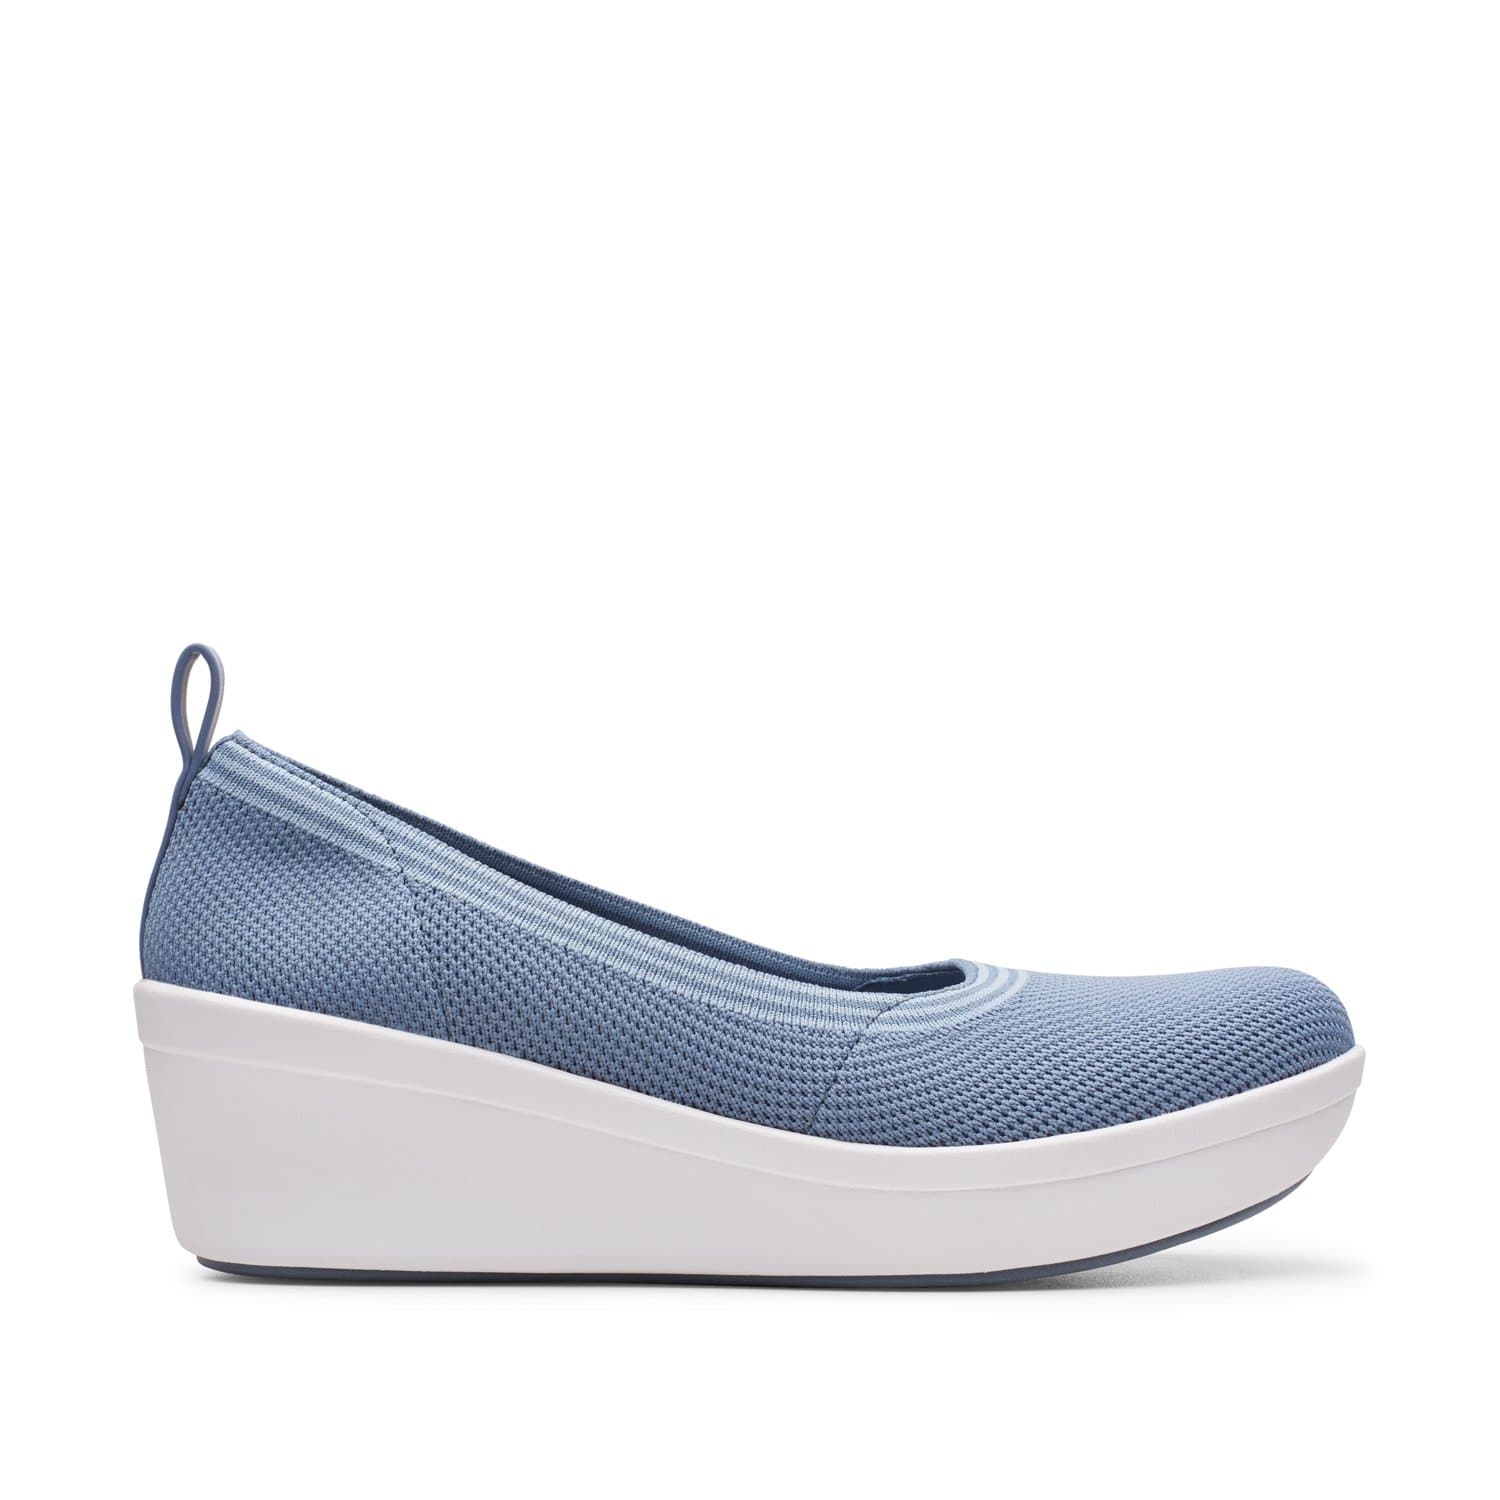 Clarks-Step-Rose-Fern-Women's-Shoes-Blue-Grey-Textile-26148607